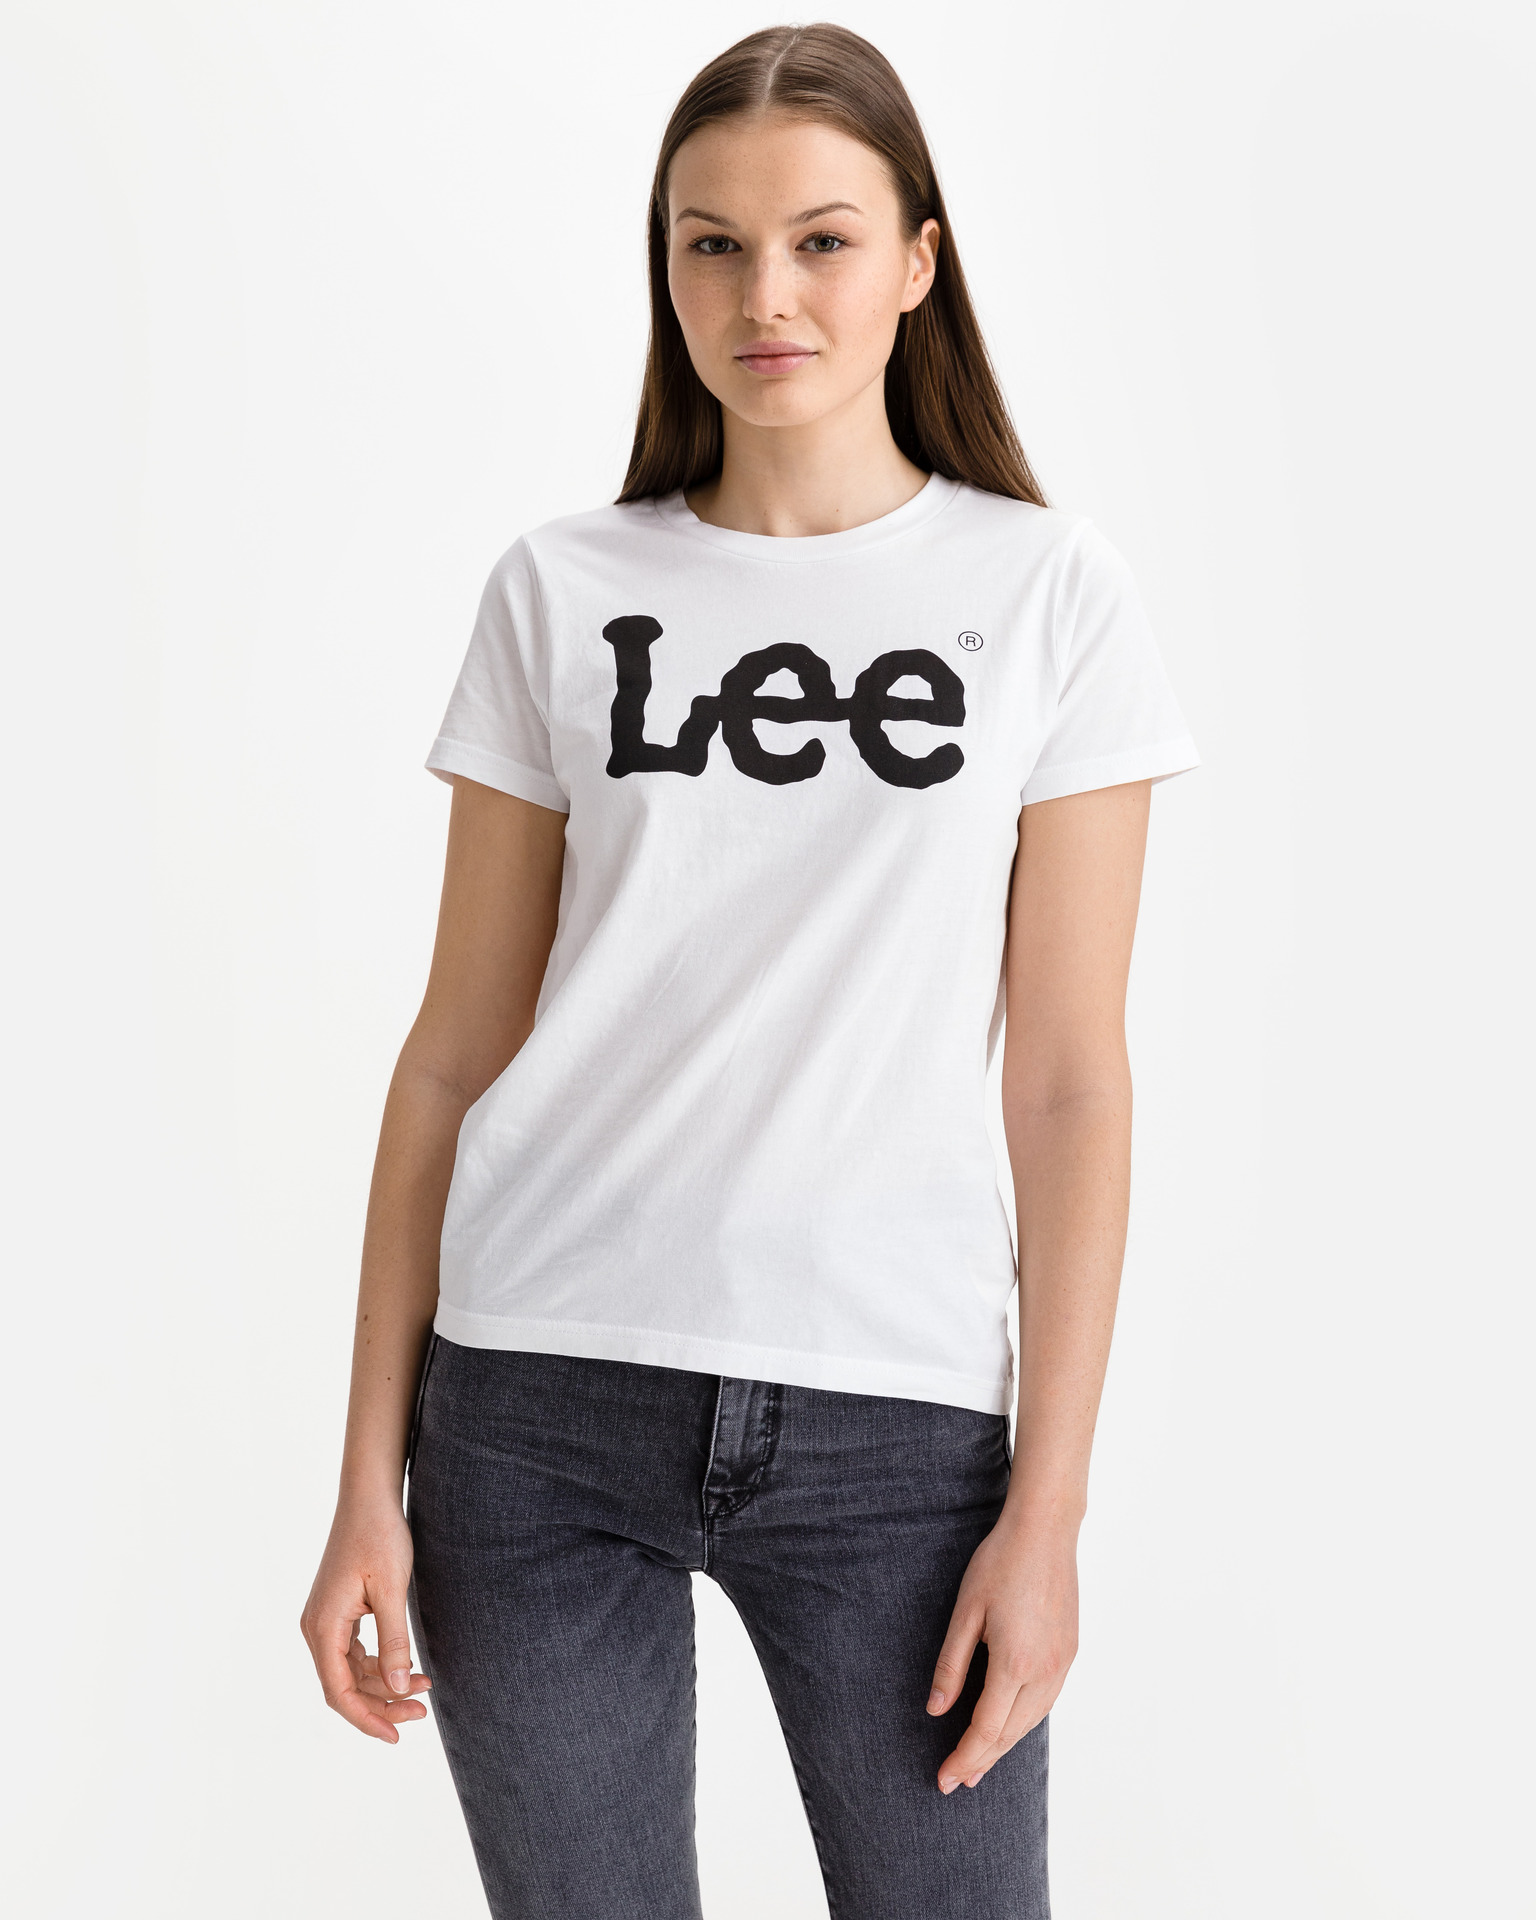 Lee - T-shirt 